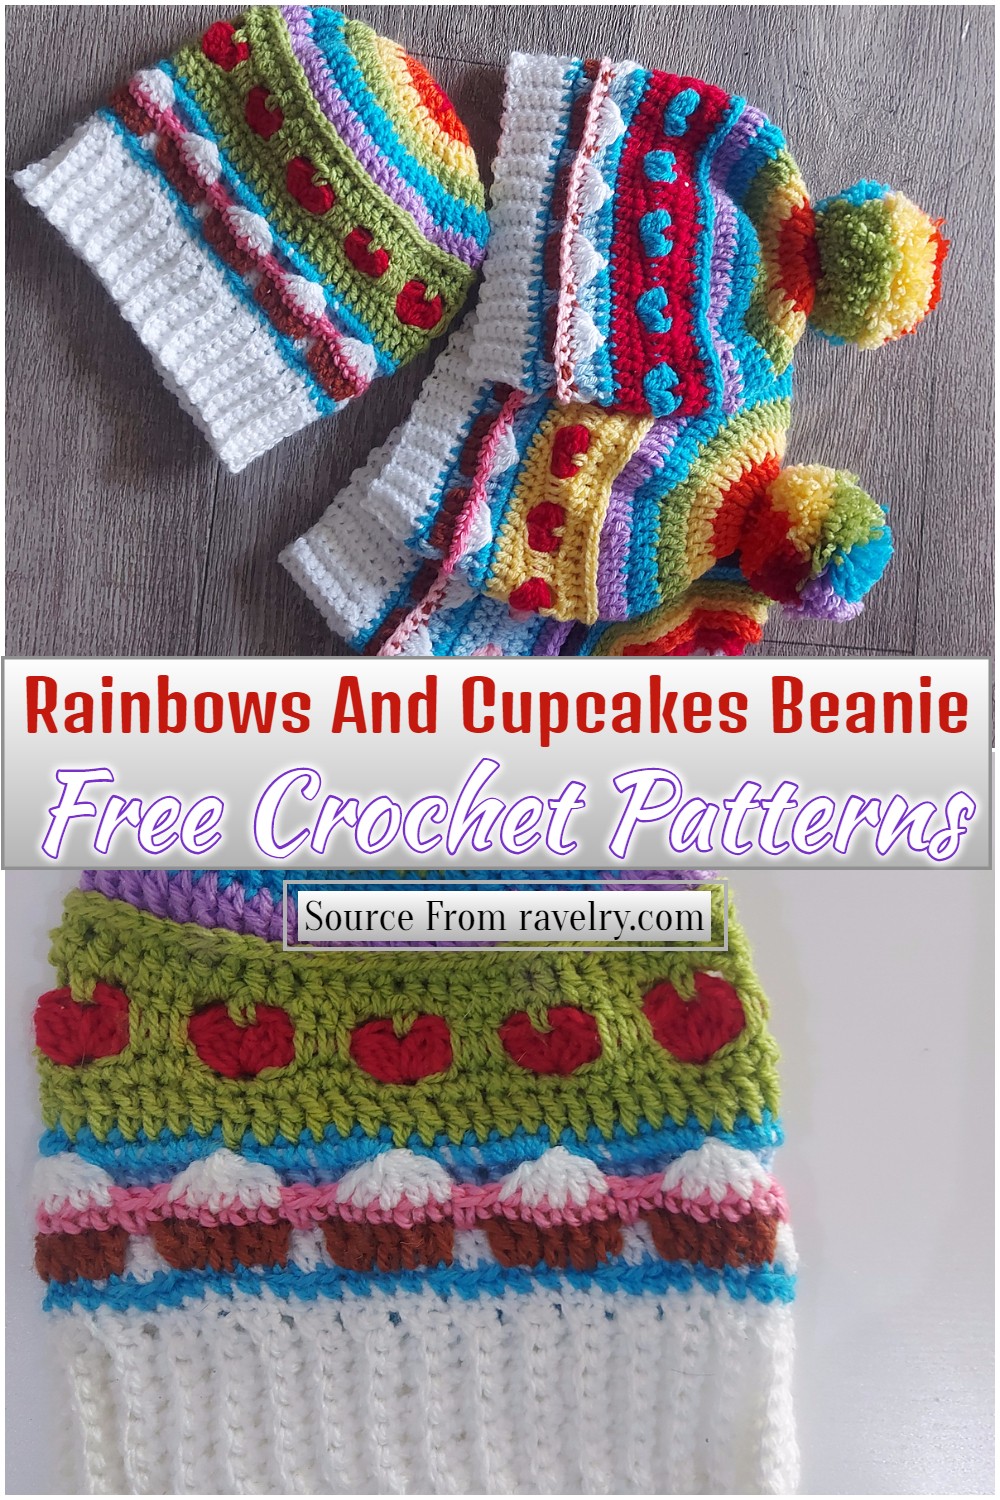 Free Crochet Rainbows And Cupcakes Beanie Pattern